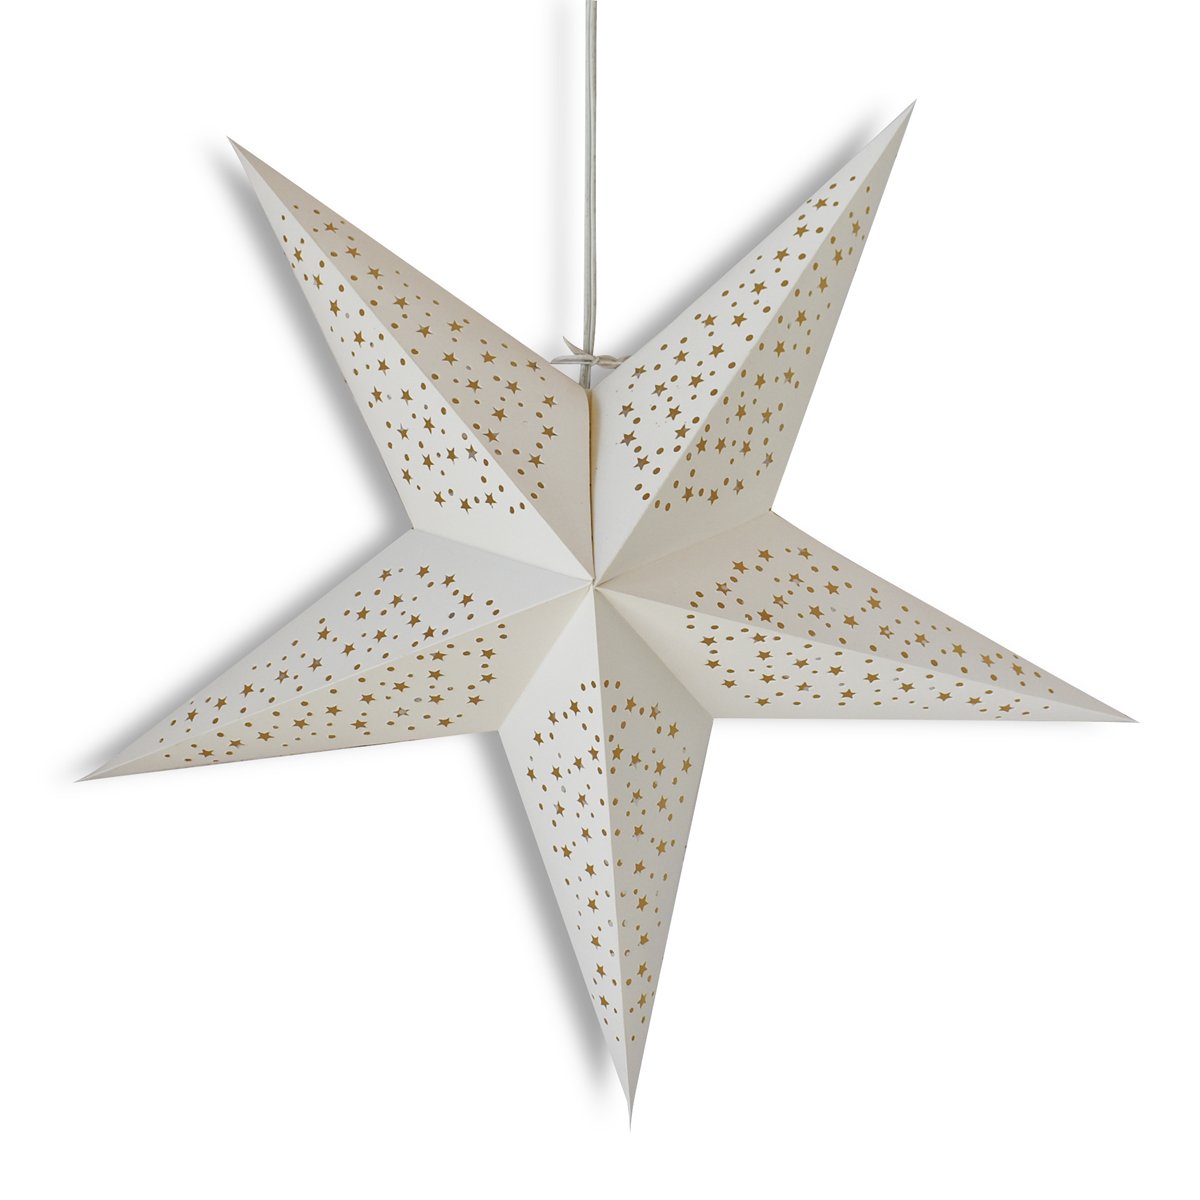 24" White 'Thousand Stars' Paper Star Lantern, Hanging Wedding & Party Decoration - PaperLanternStore.com - Paper Lanterns, Decor, Party Lights & More